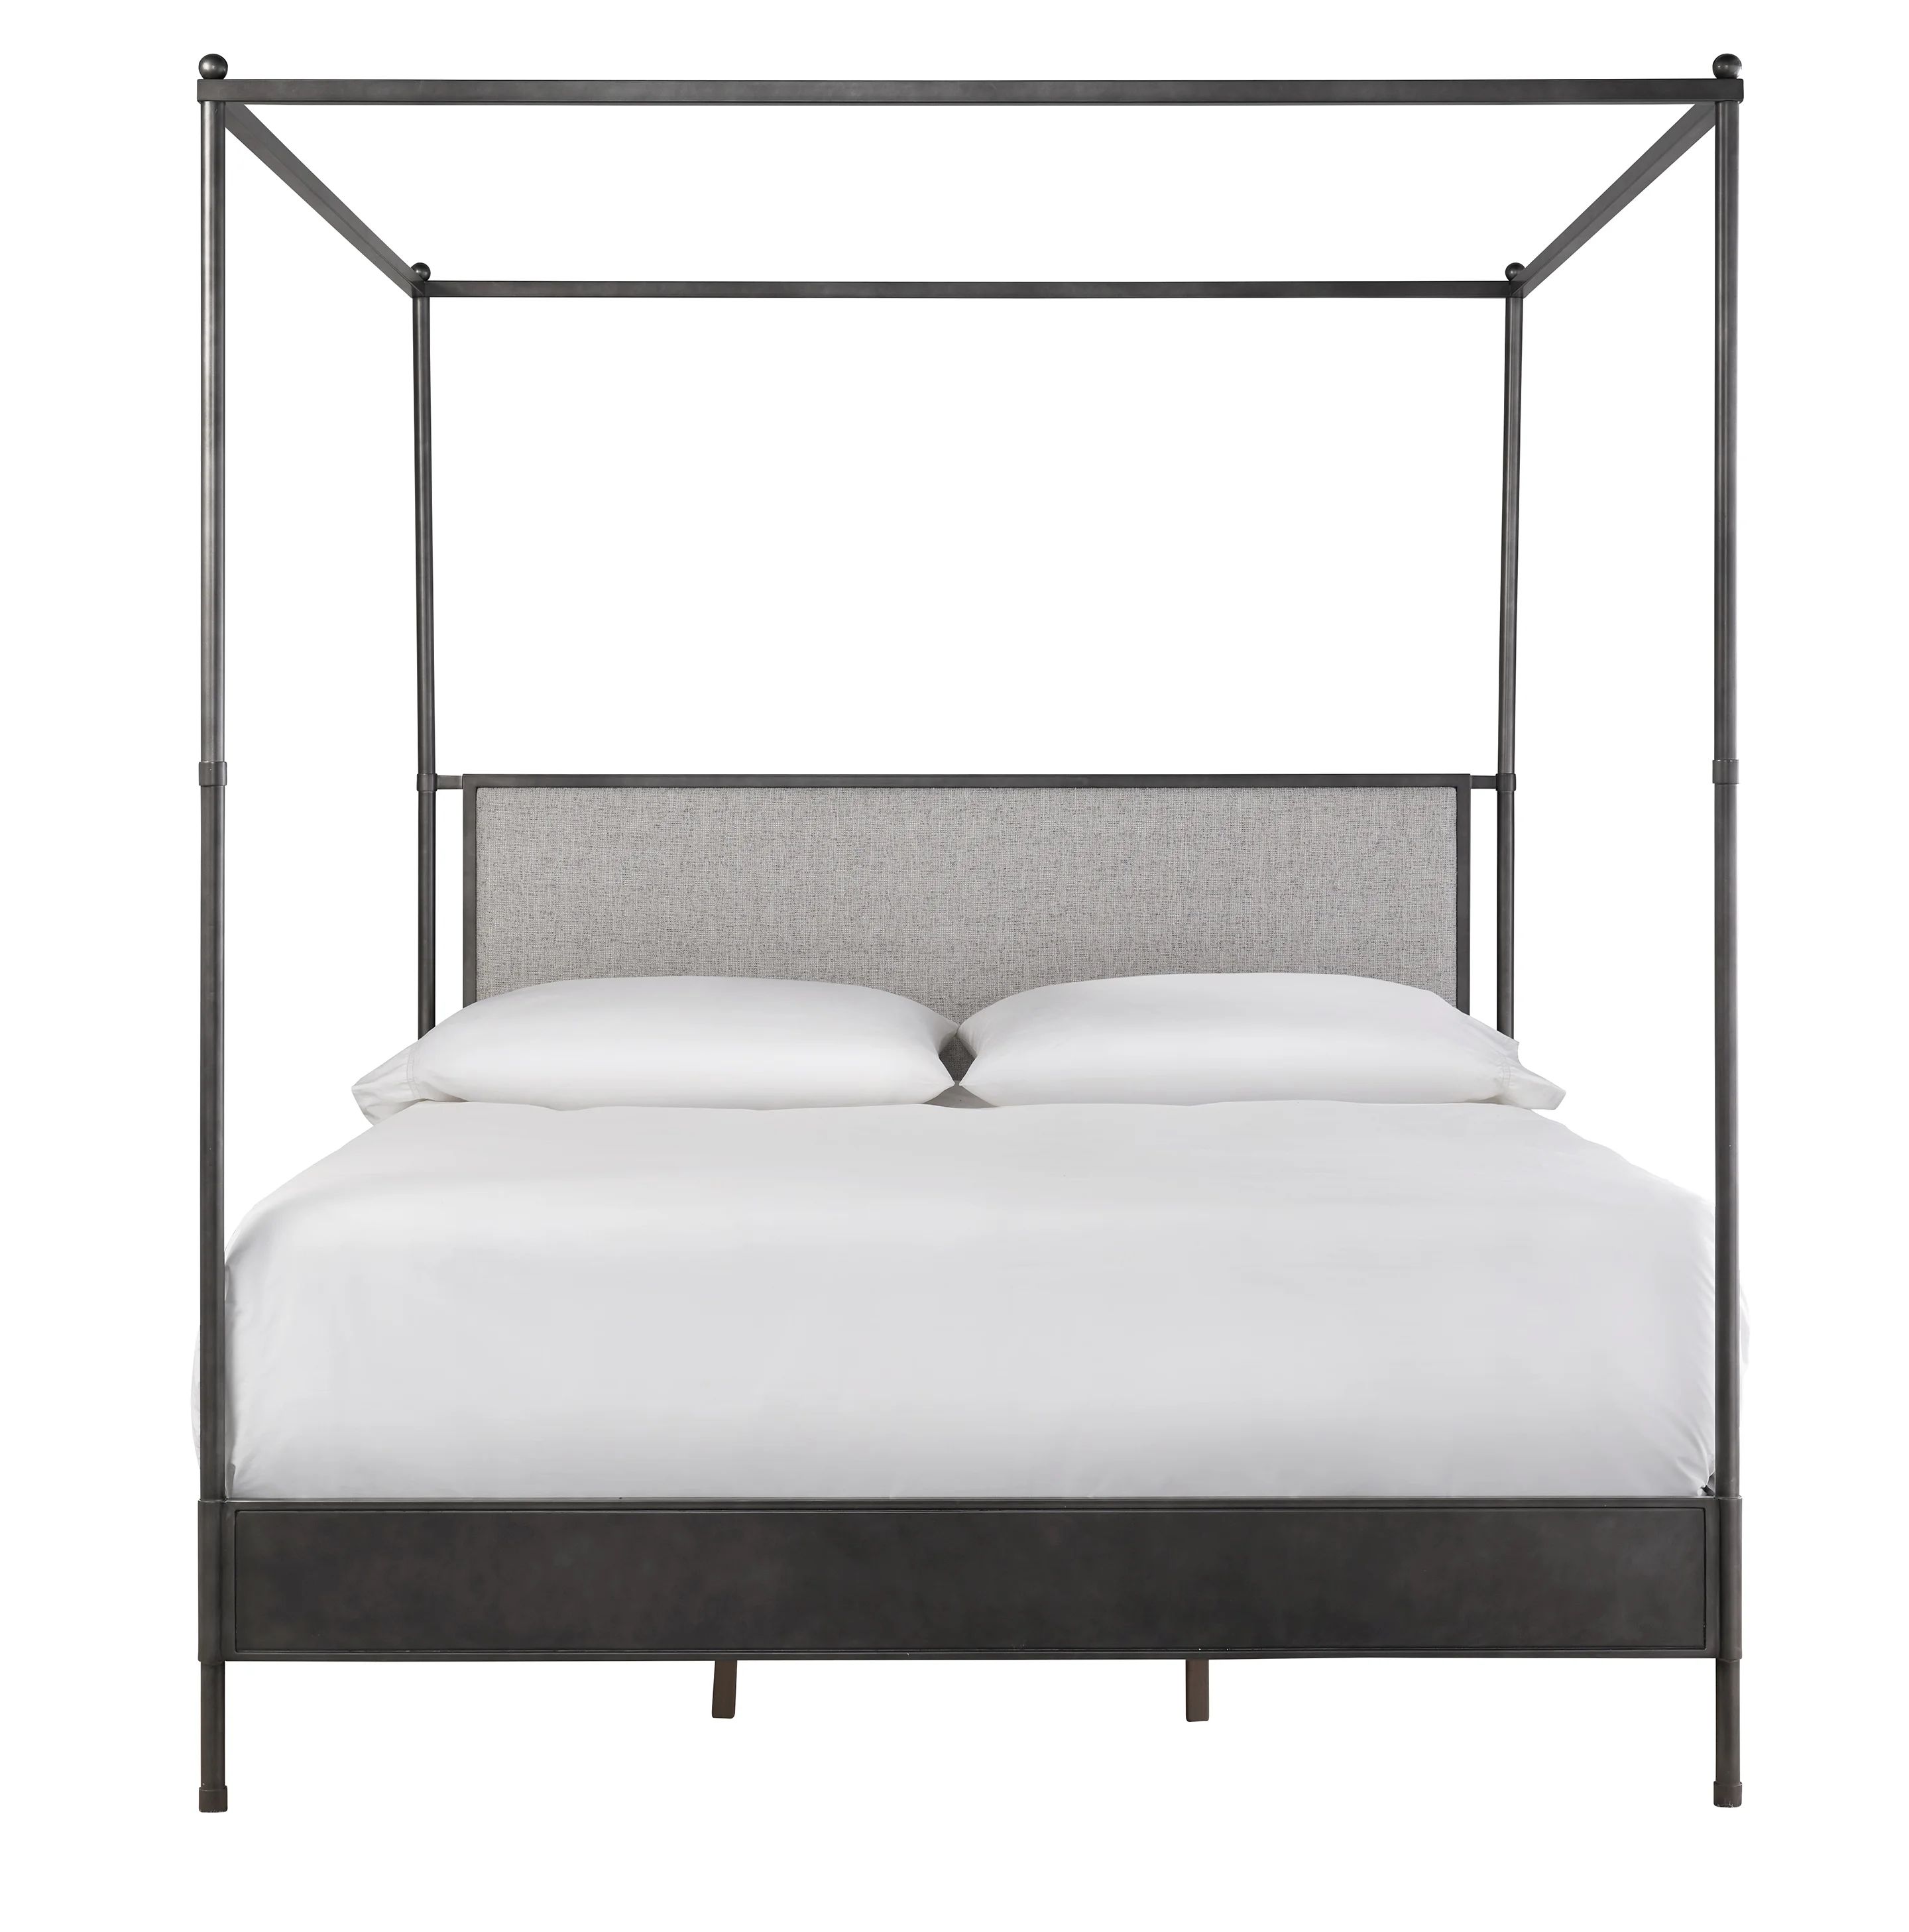 Bilbrook Upholstered Metal Canopy Bed | Wayfair North America